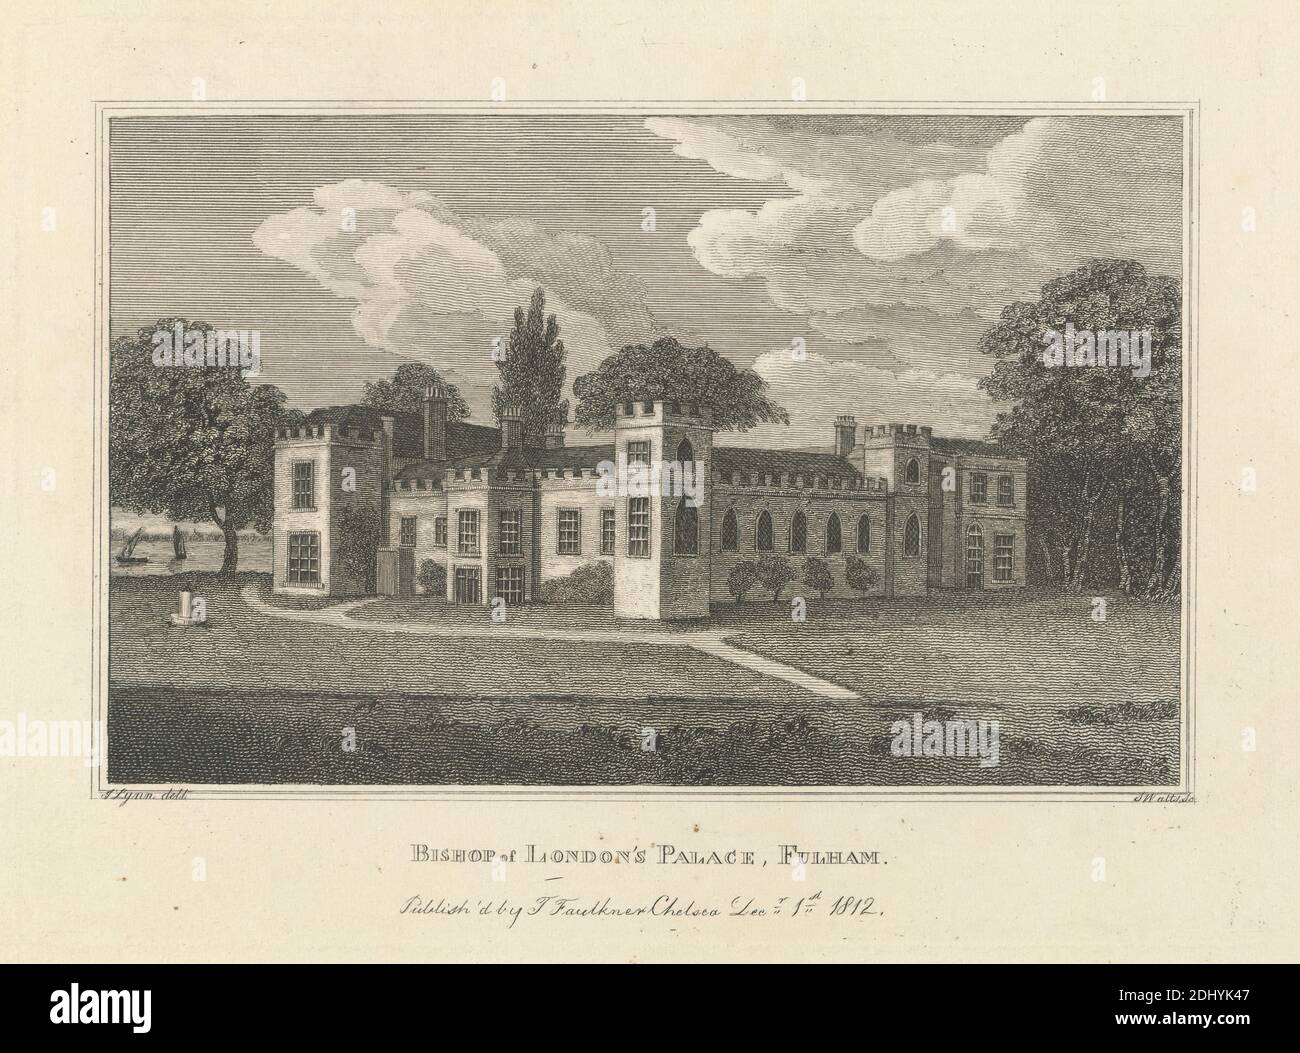 Bishop of London's Palace, Fulham, Simon Watts, attivo nel 1812, dopo John Lynn, 1826–1838, British, 1812, Engraving Foto Stock